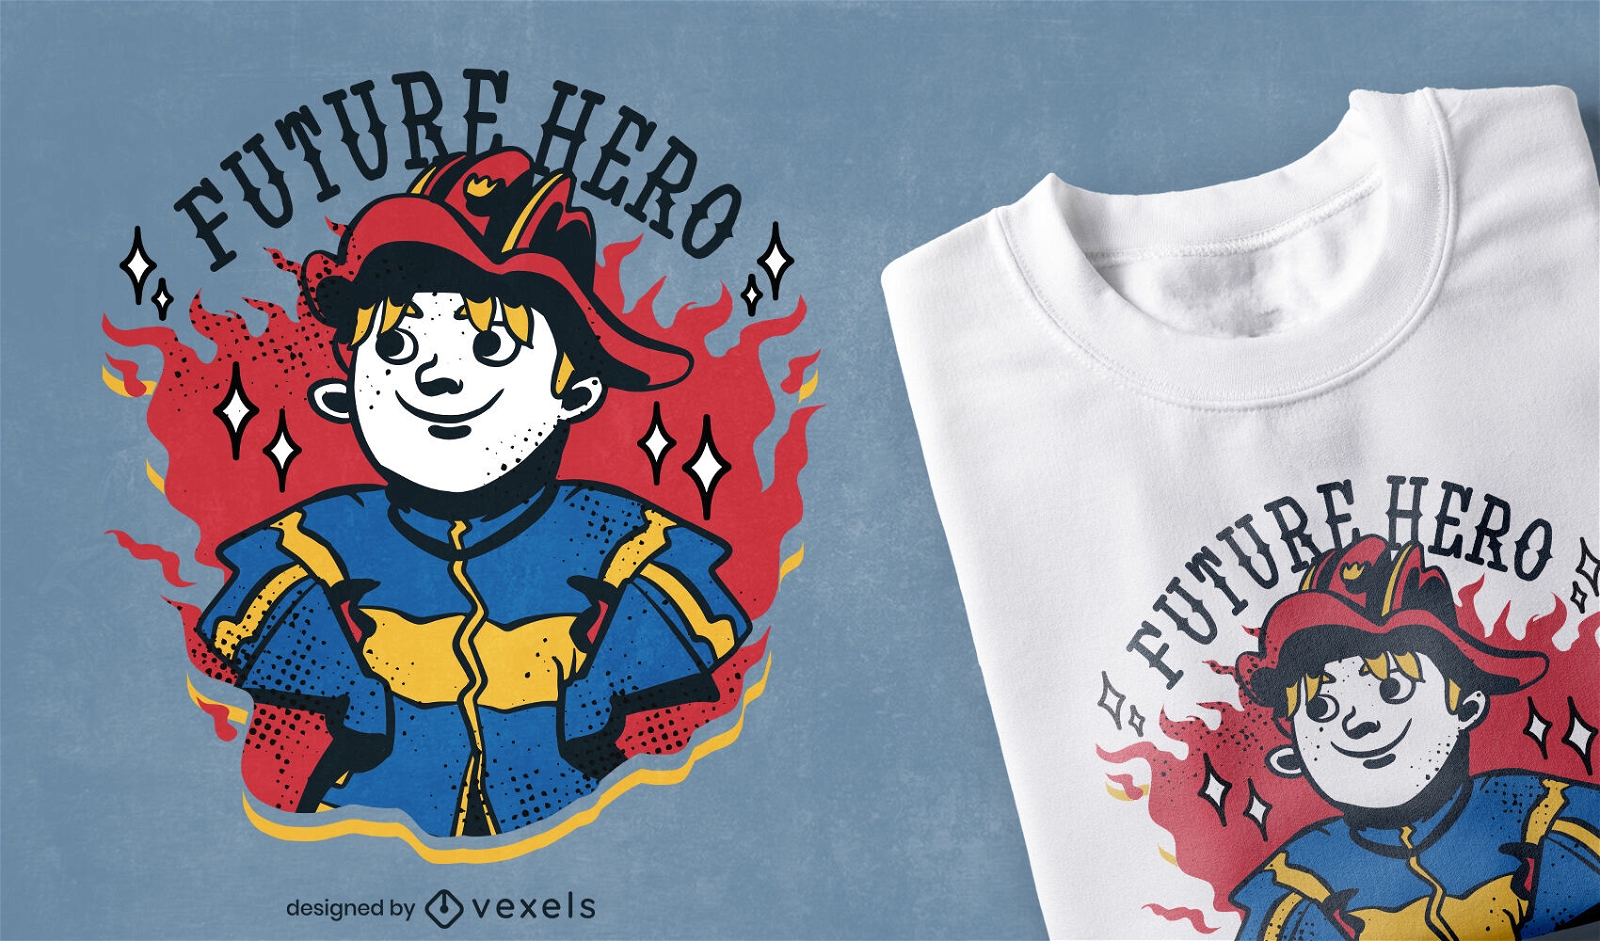 Firefighter future hero t-shirt design